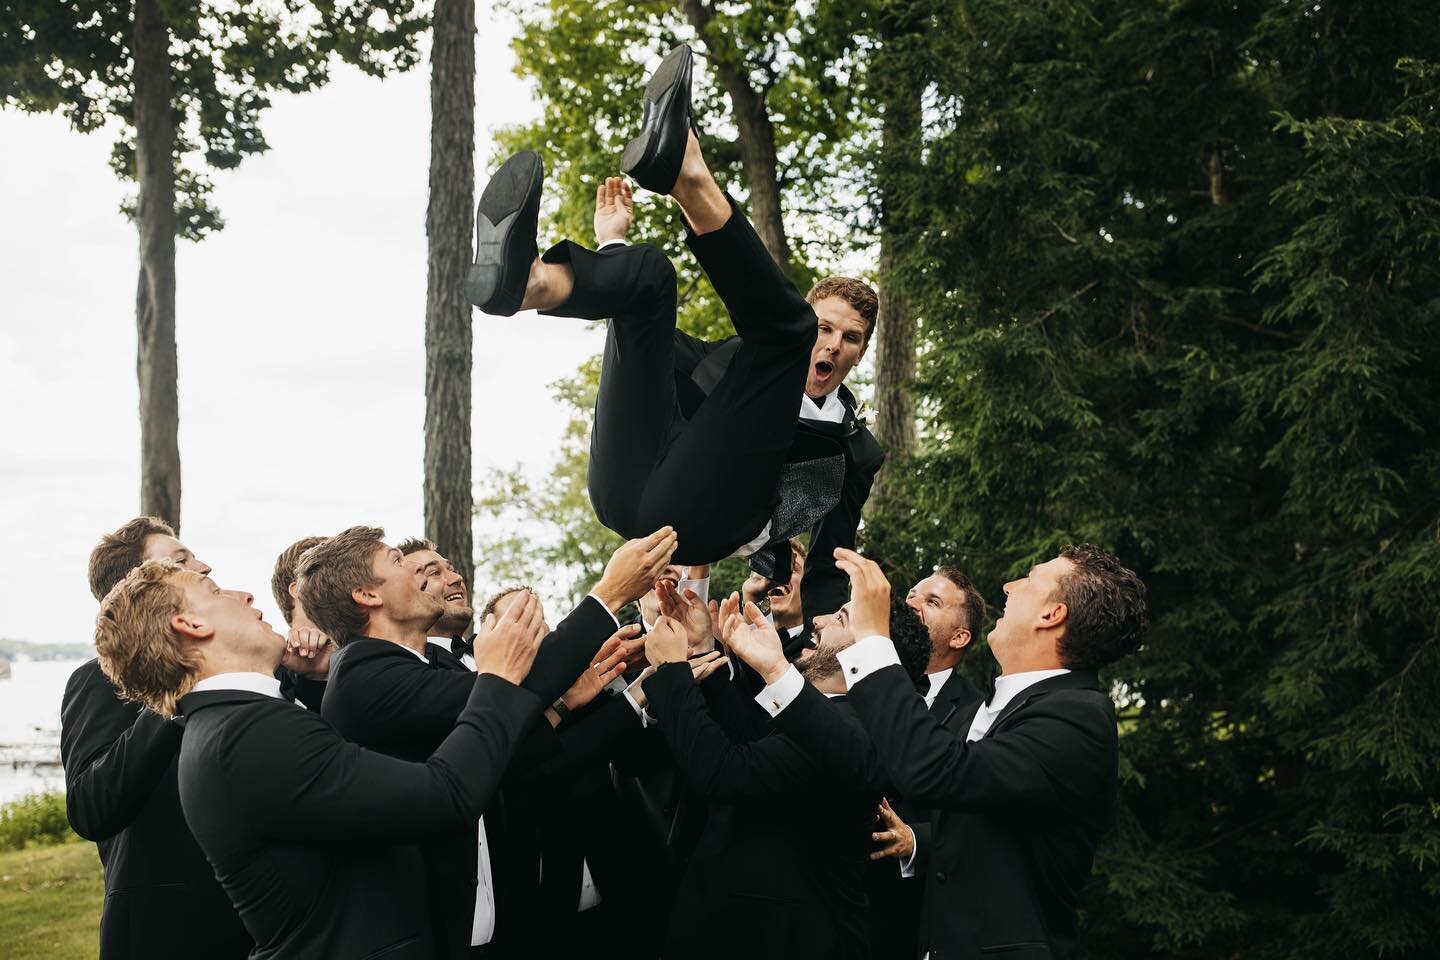 Forever a fan of a groom toss - Happy Friday everyone! 

#thisonesforthegrooms #groomtoss #friday #fridayvibes #summerwedding #funday #cheerstotheweekend #weddingphotographer #weddingphotography